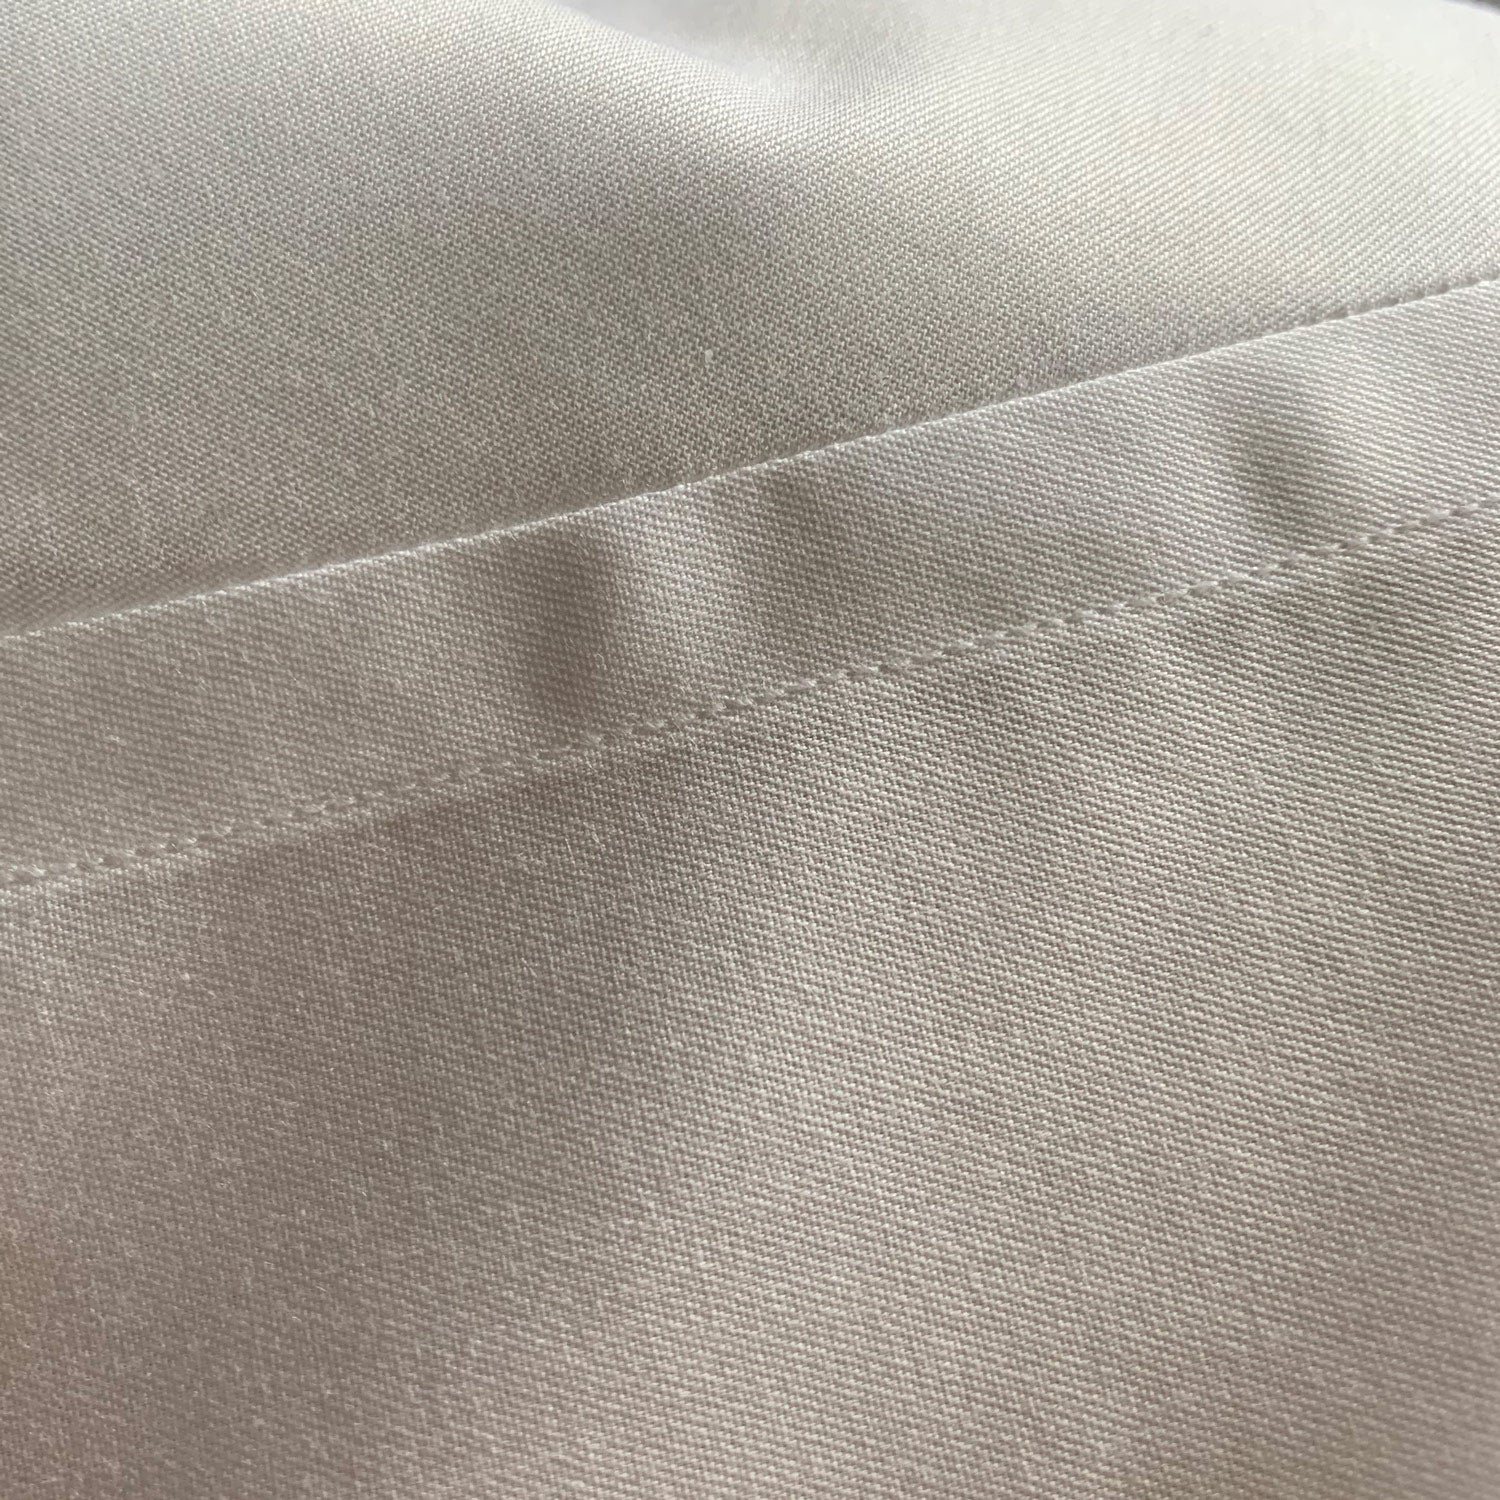 single needle stitching at armhole on high quality mens shirt